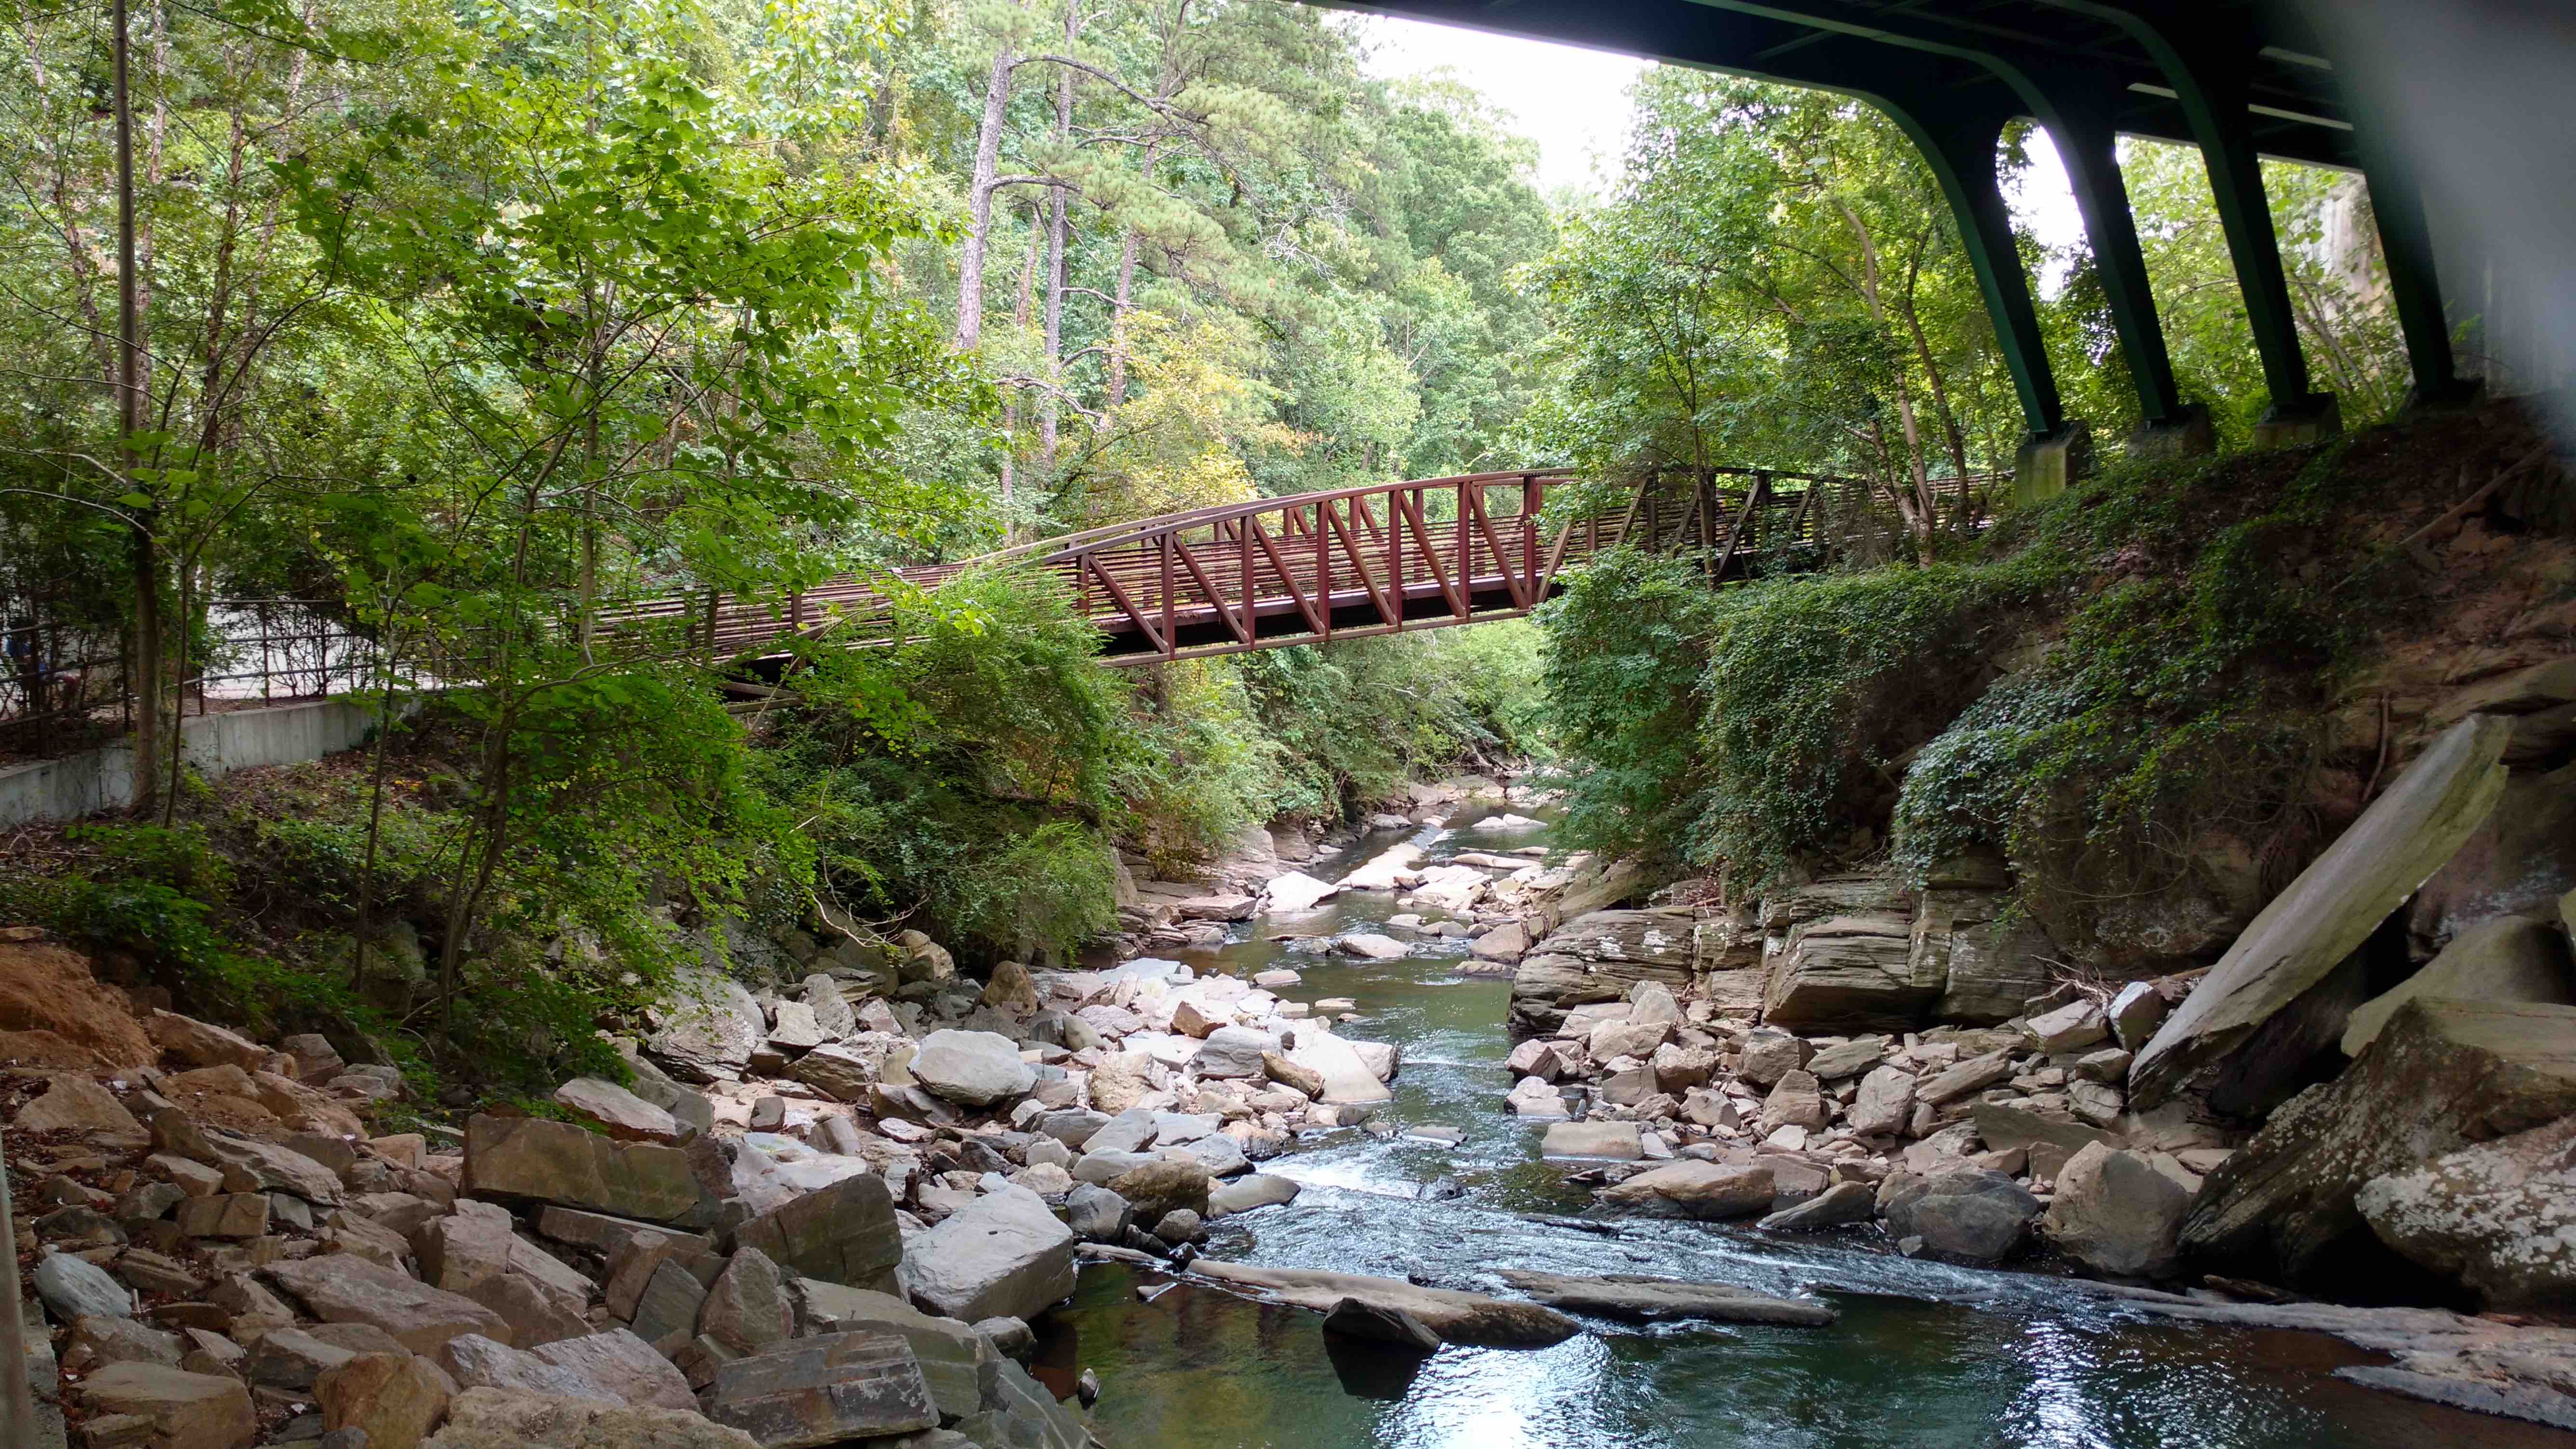 Bridge View at Rottenwood Creek